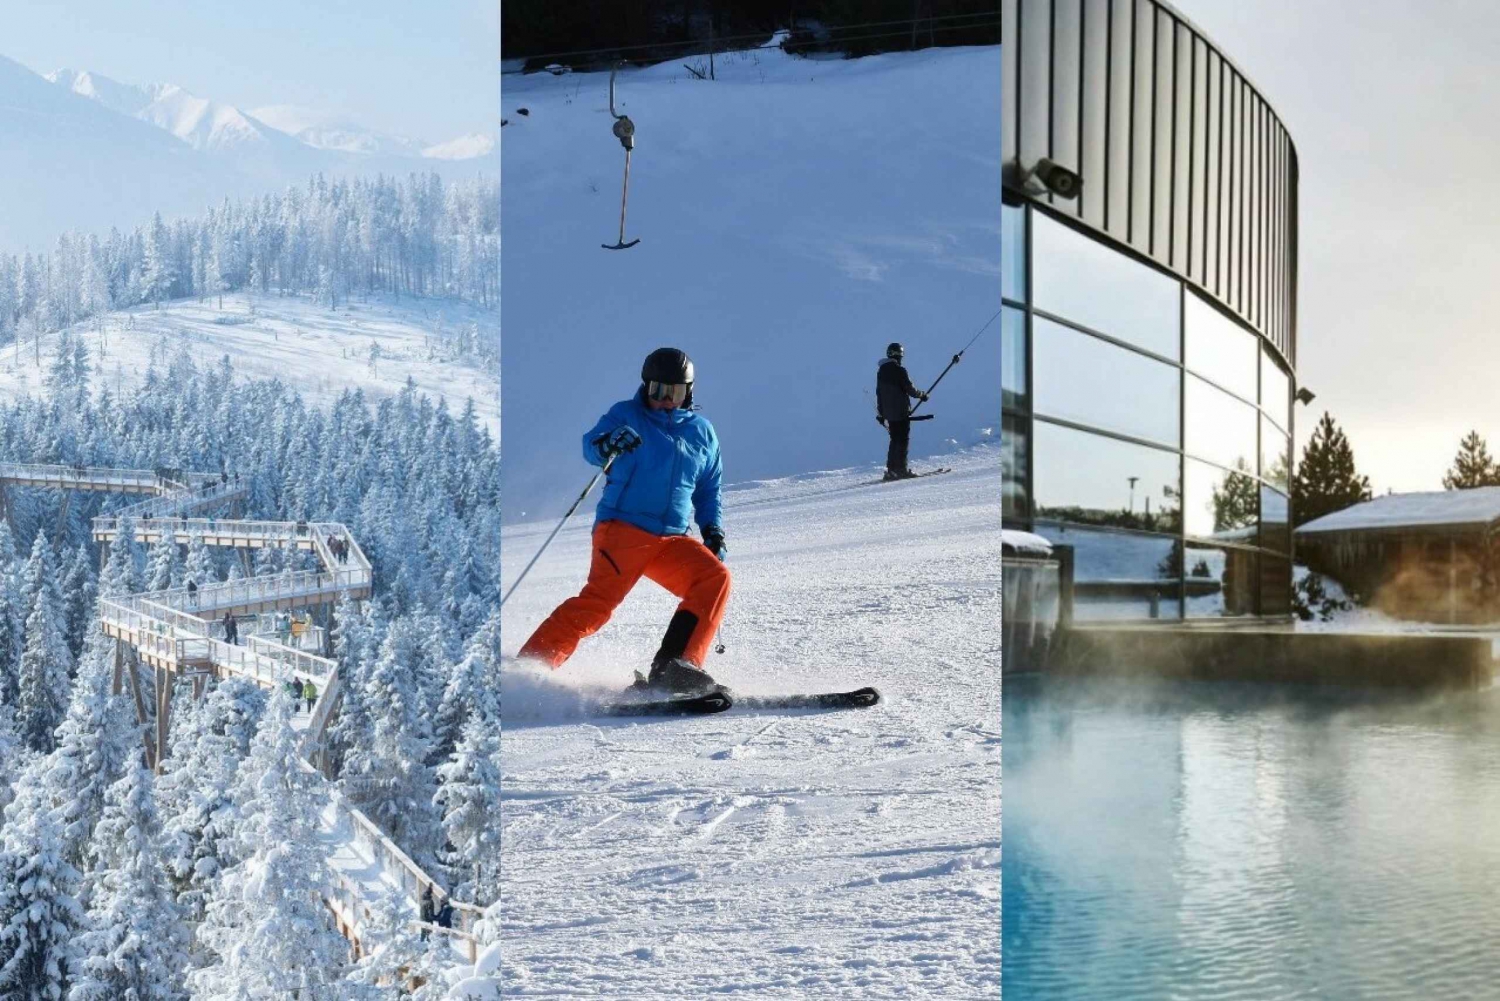 Krakovasta: Slovakia Treetop Walk, Skiing, and Thermal Bath: Slovakia Treetop Walk, Skiing, and Thermal Bath